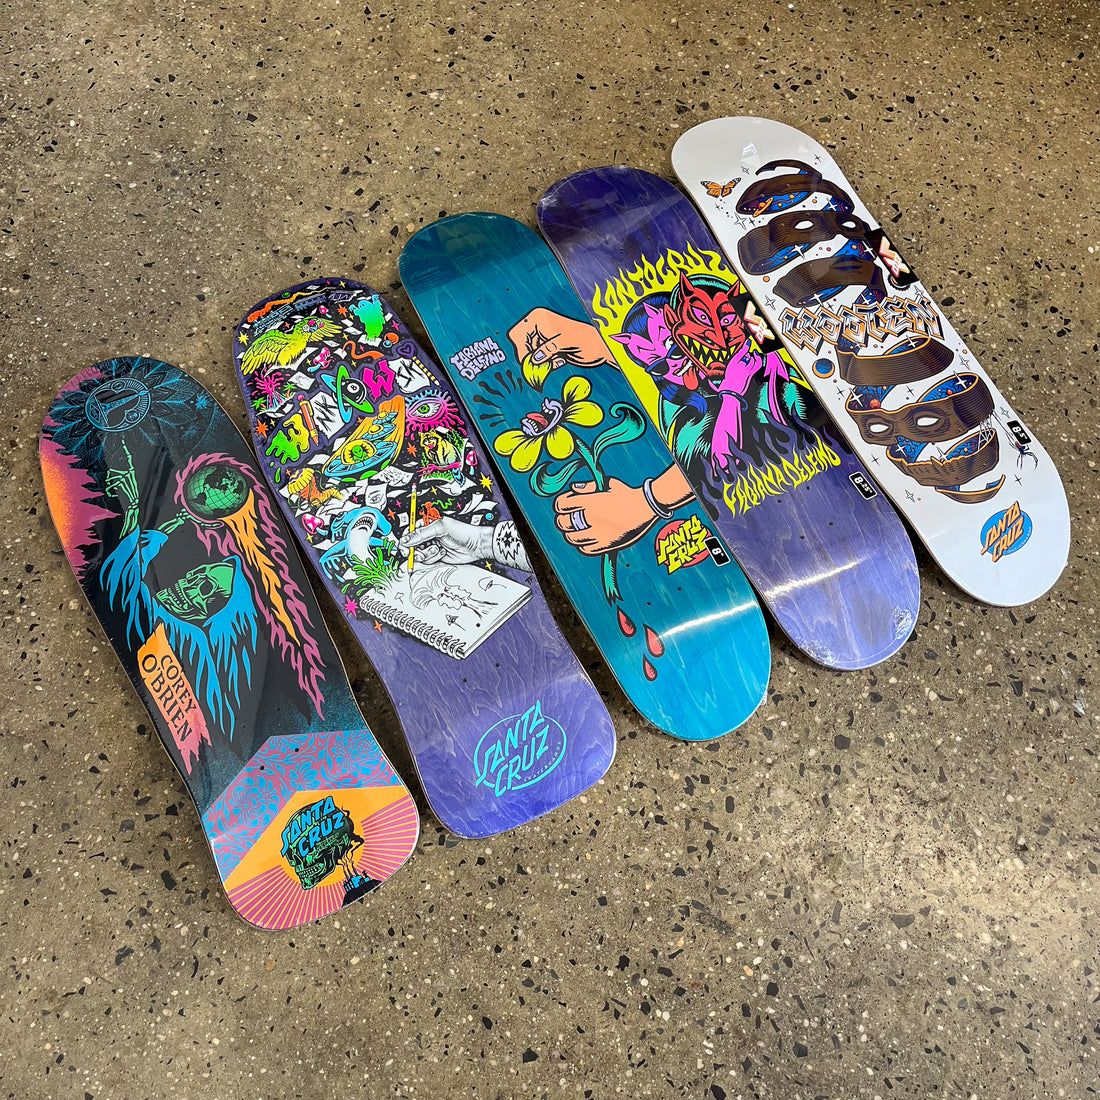 Santa Cruz and Creature Skateboards Restock